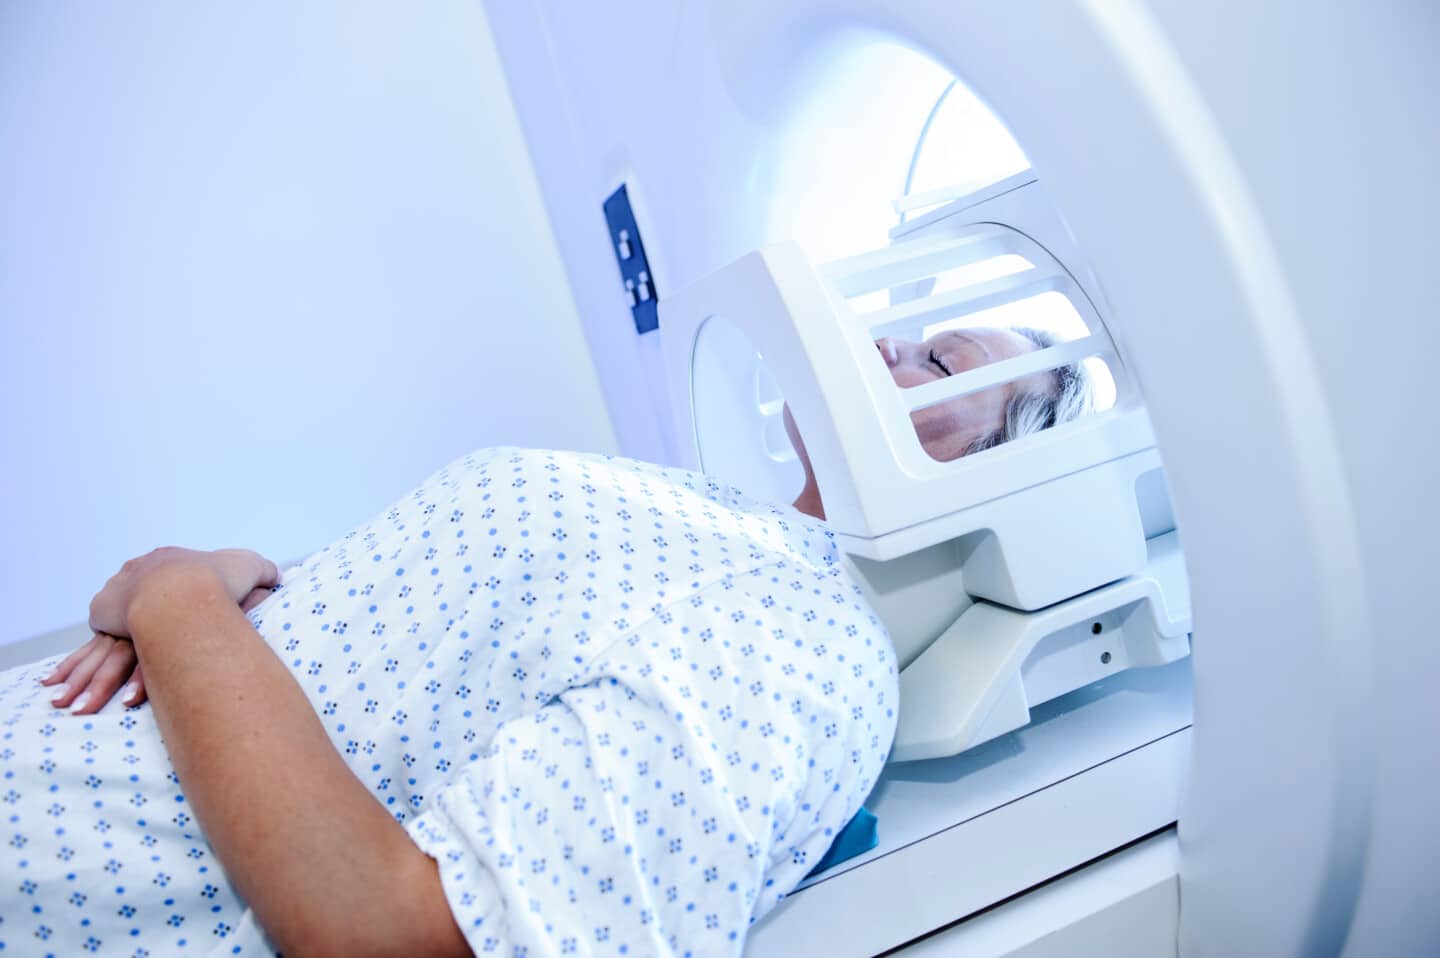 Patient laying in MRI machine